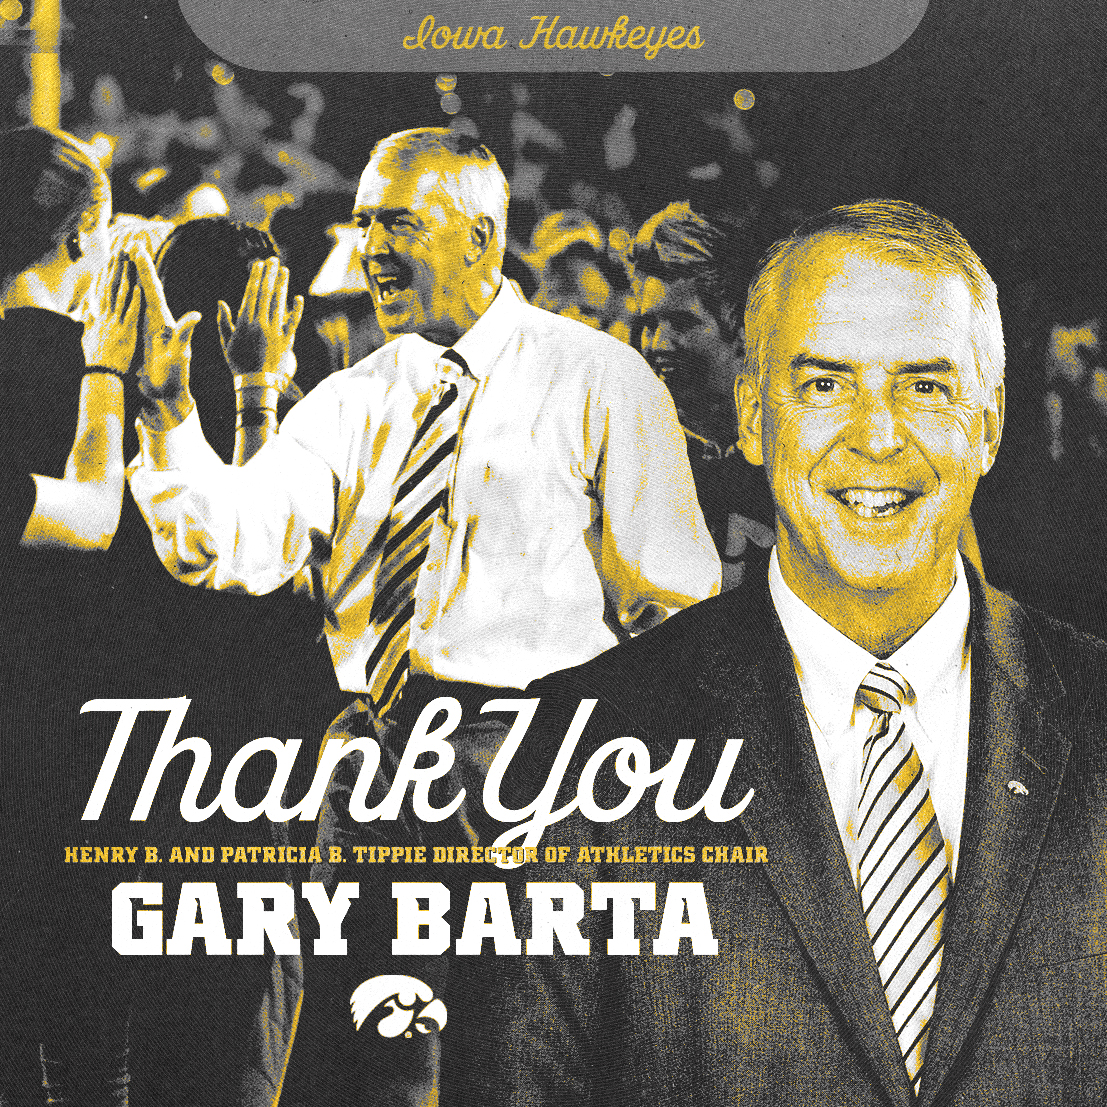 Thank you Gary Barta 